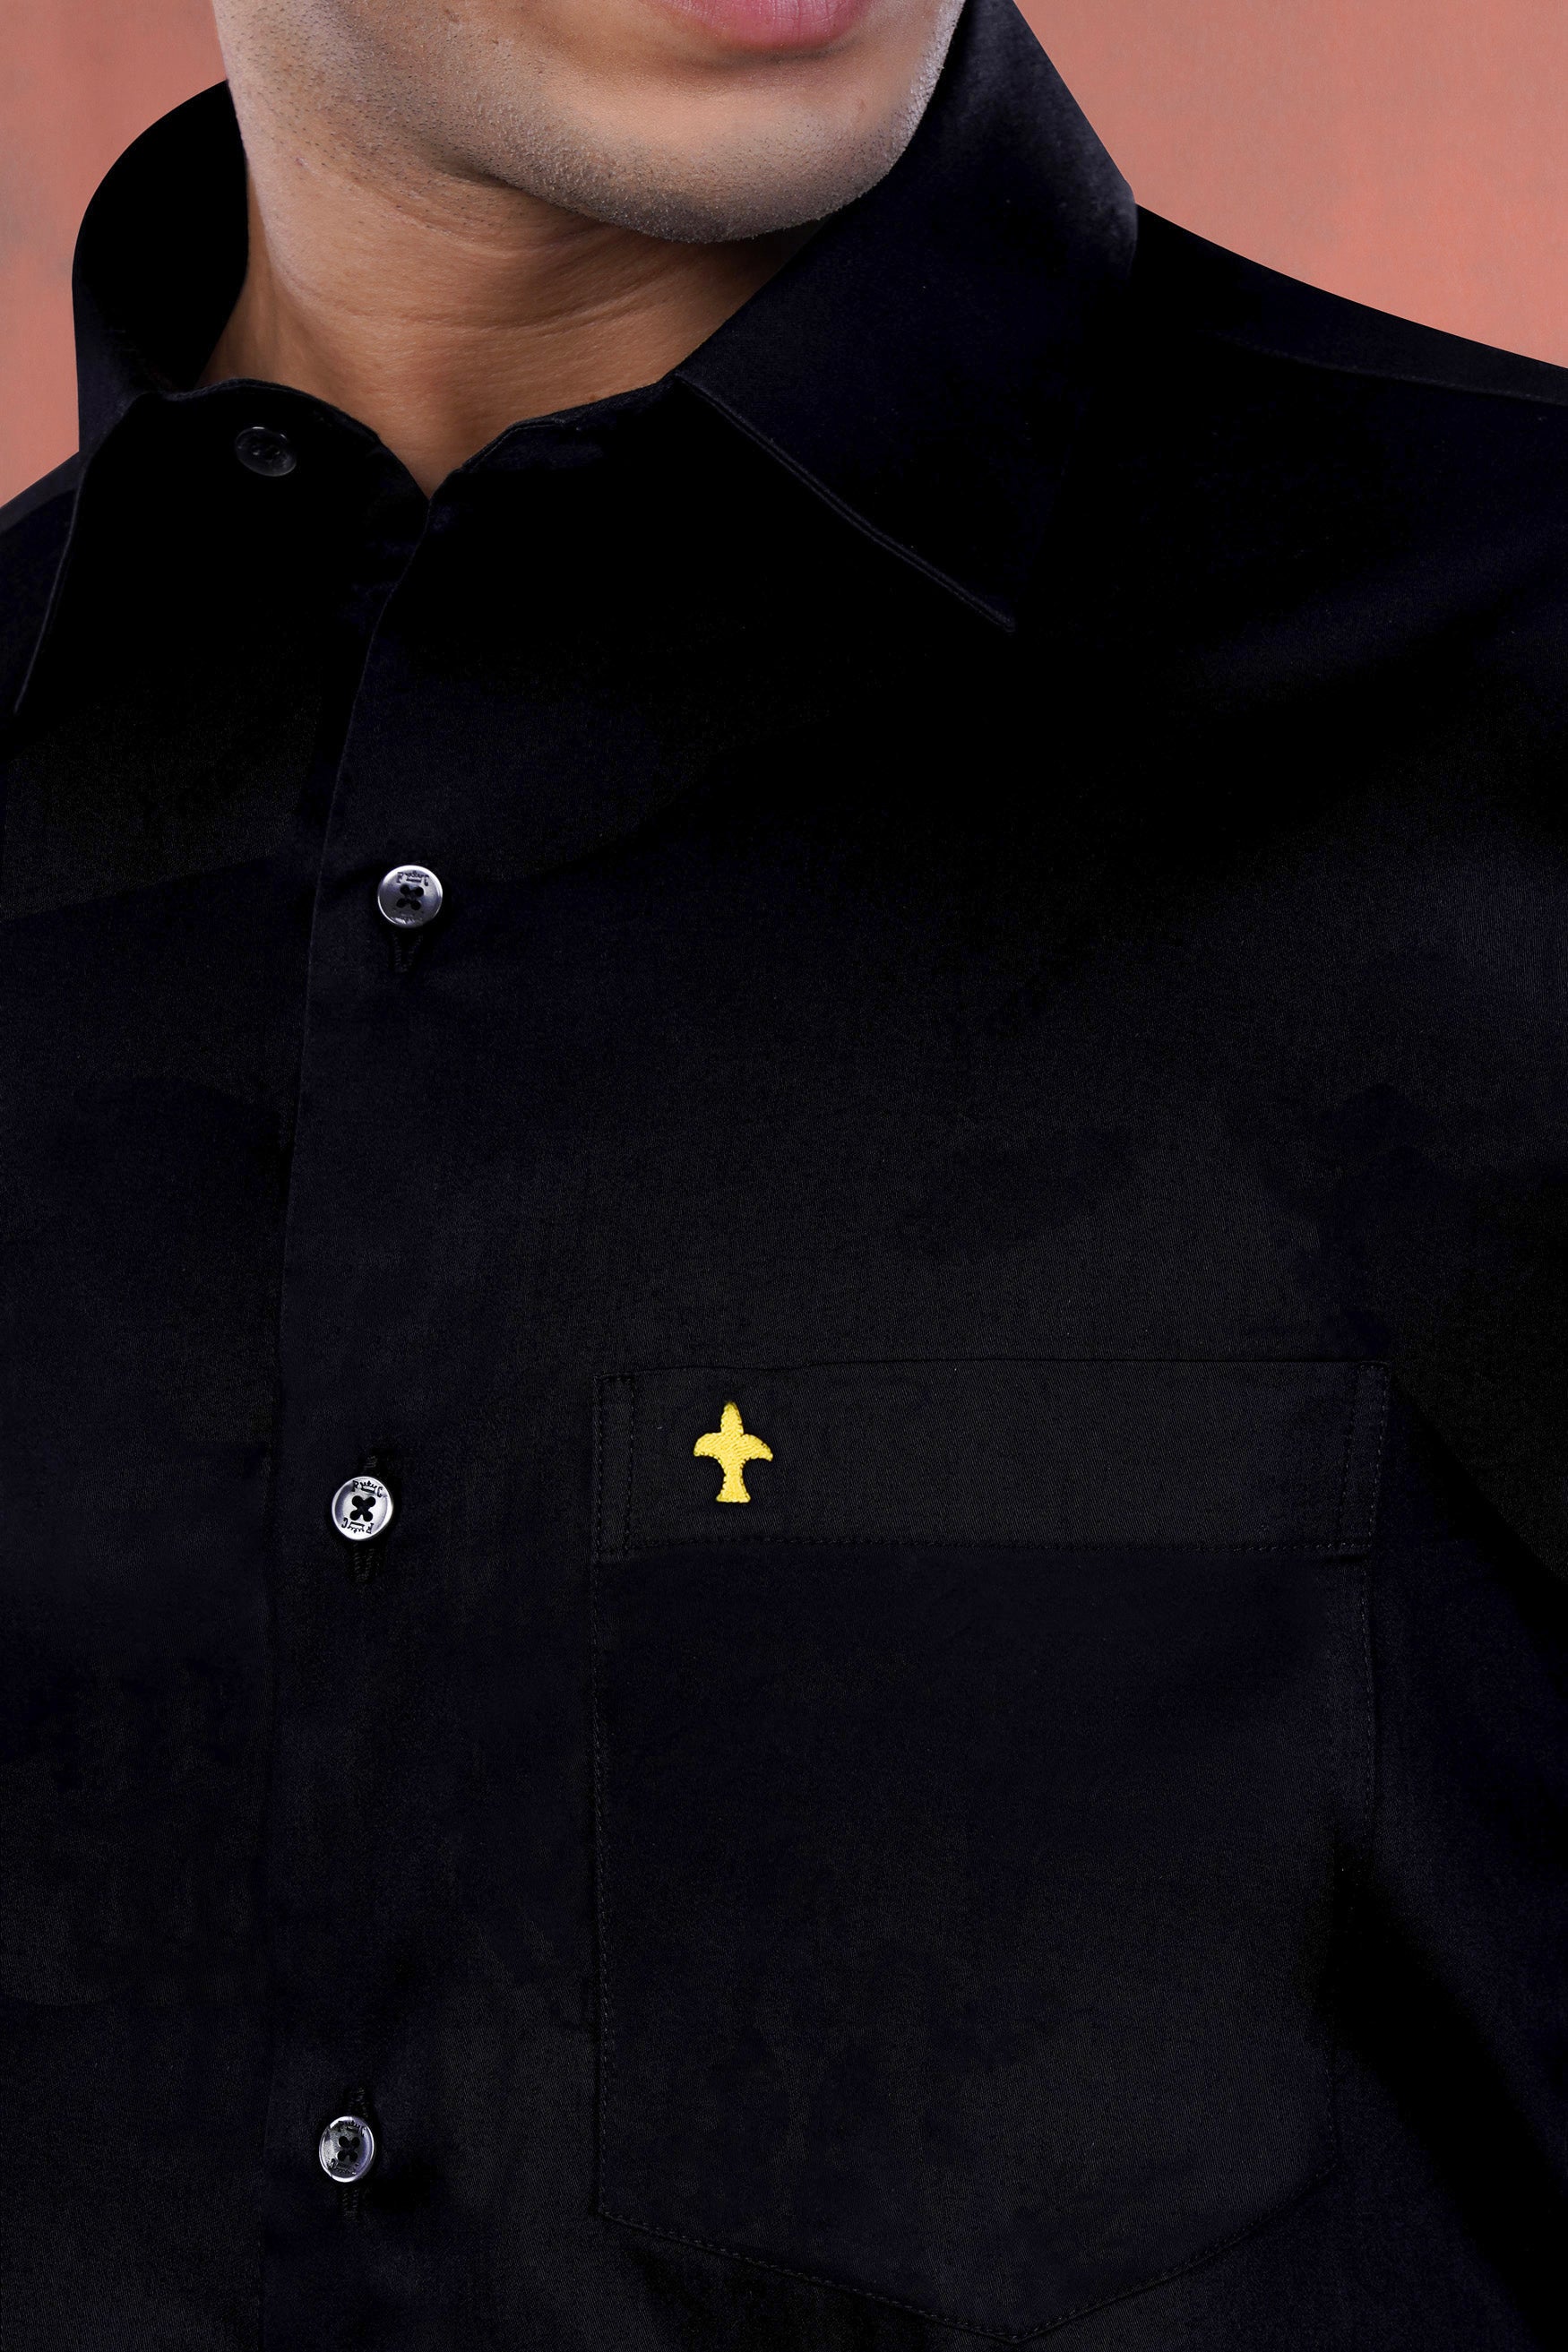 Jade Black Brand Element Embroidered Subtle Sheen Super Soft Premium Cotton Designer Shirt